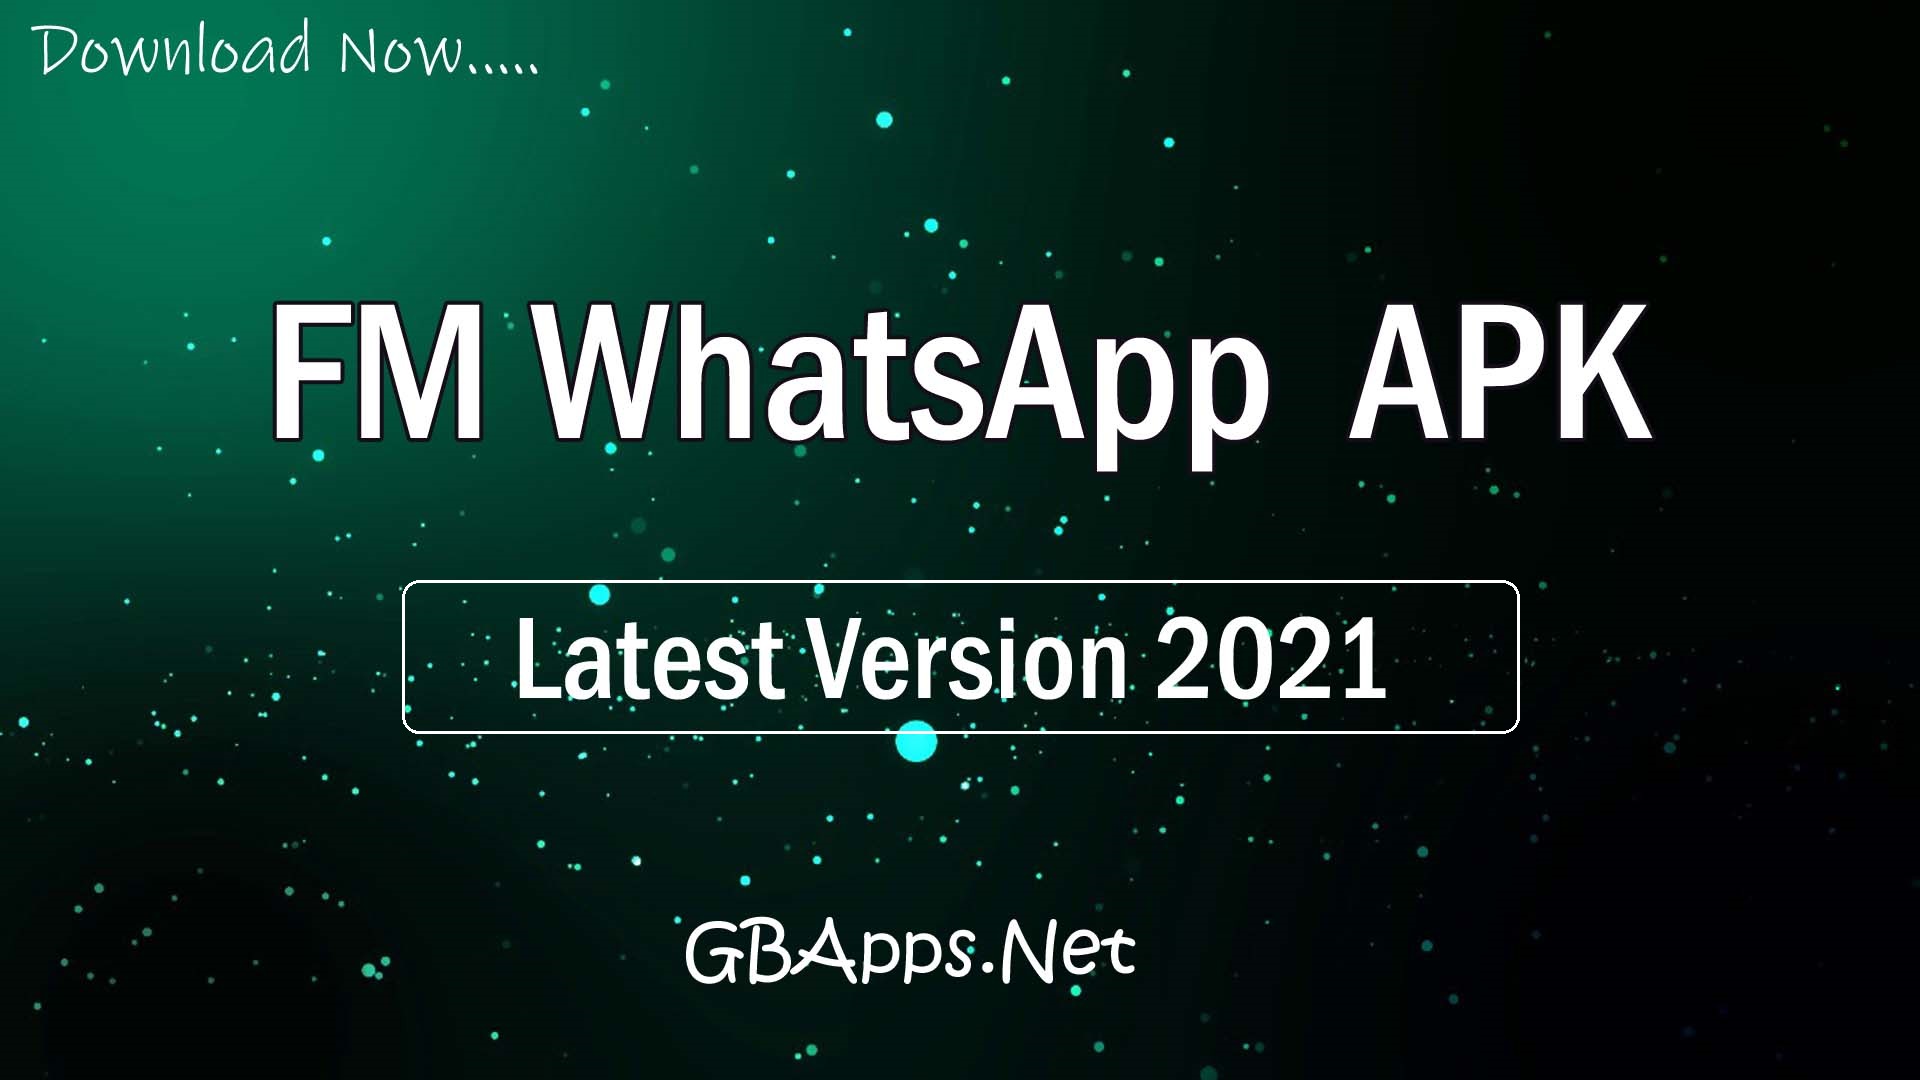 whatsapp apk latest version 2021 download